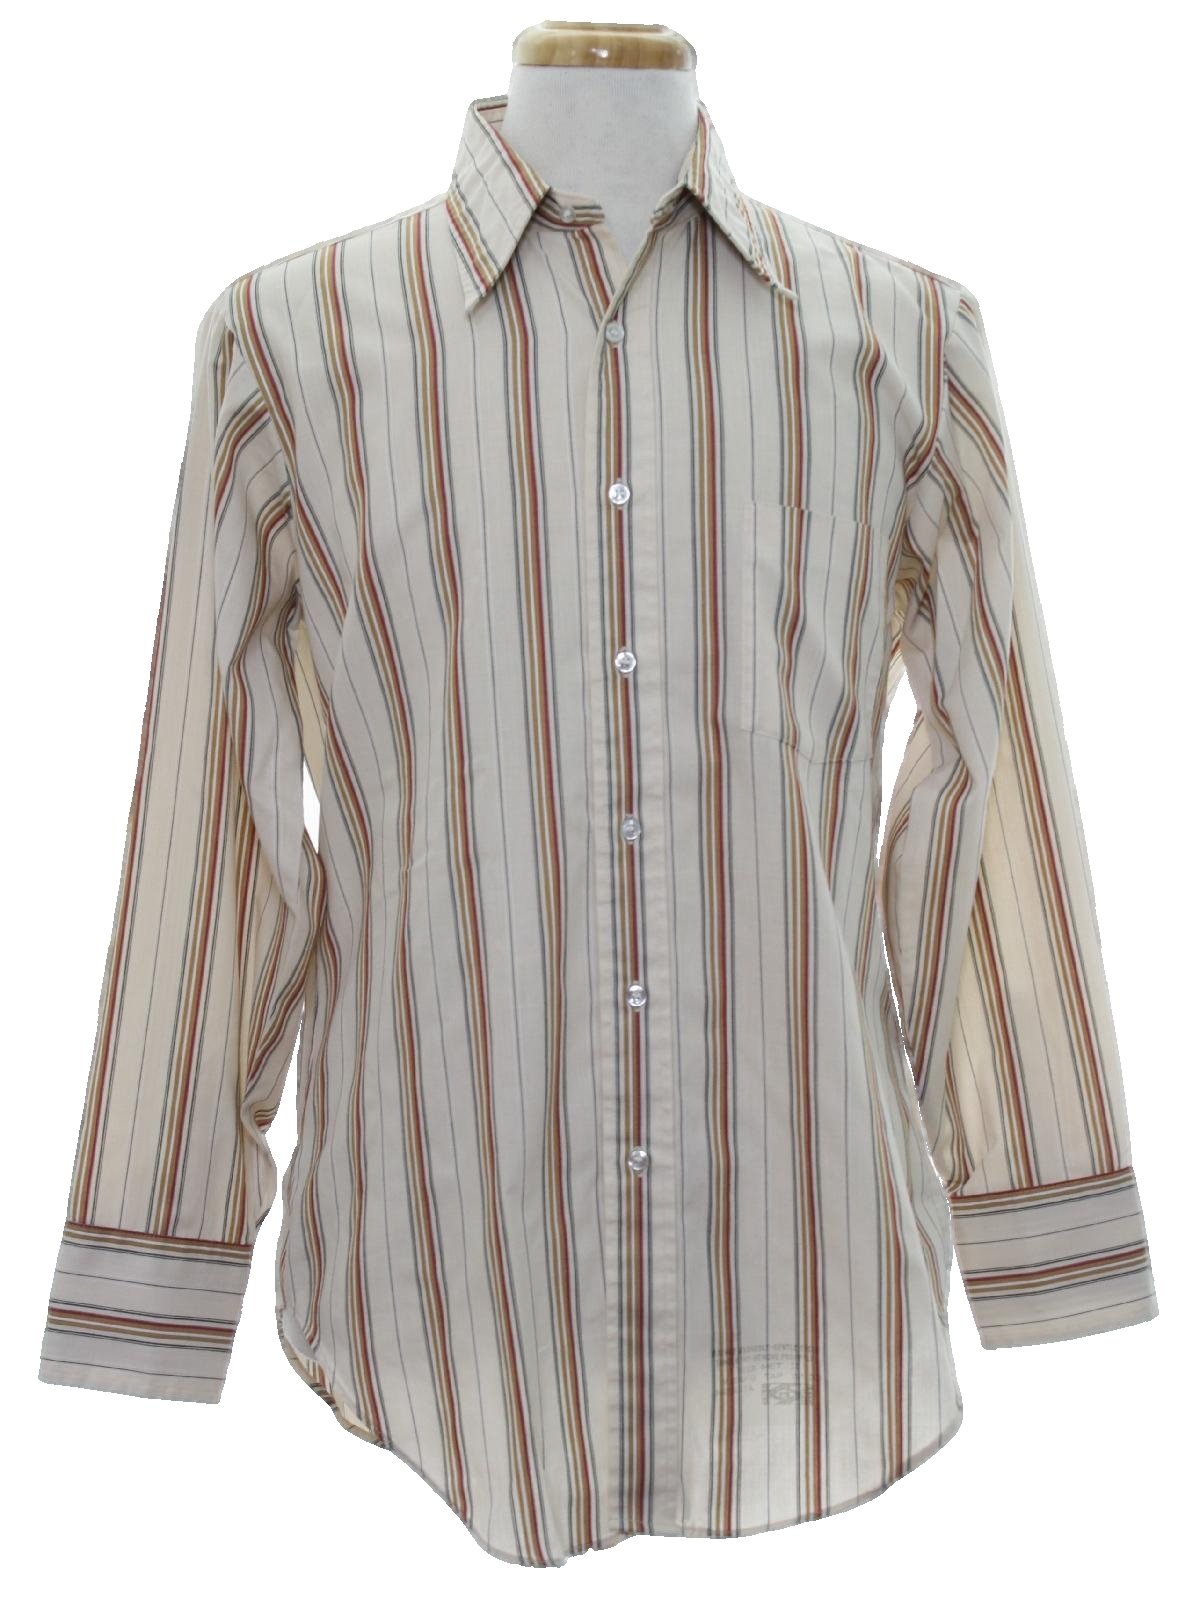 Retro 1960's Shirt (Fabric Label) : Late 60s -Fabric Label- Mens light